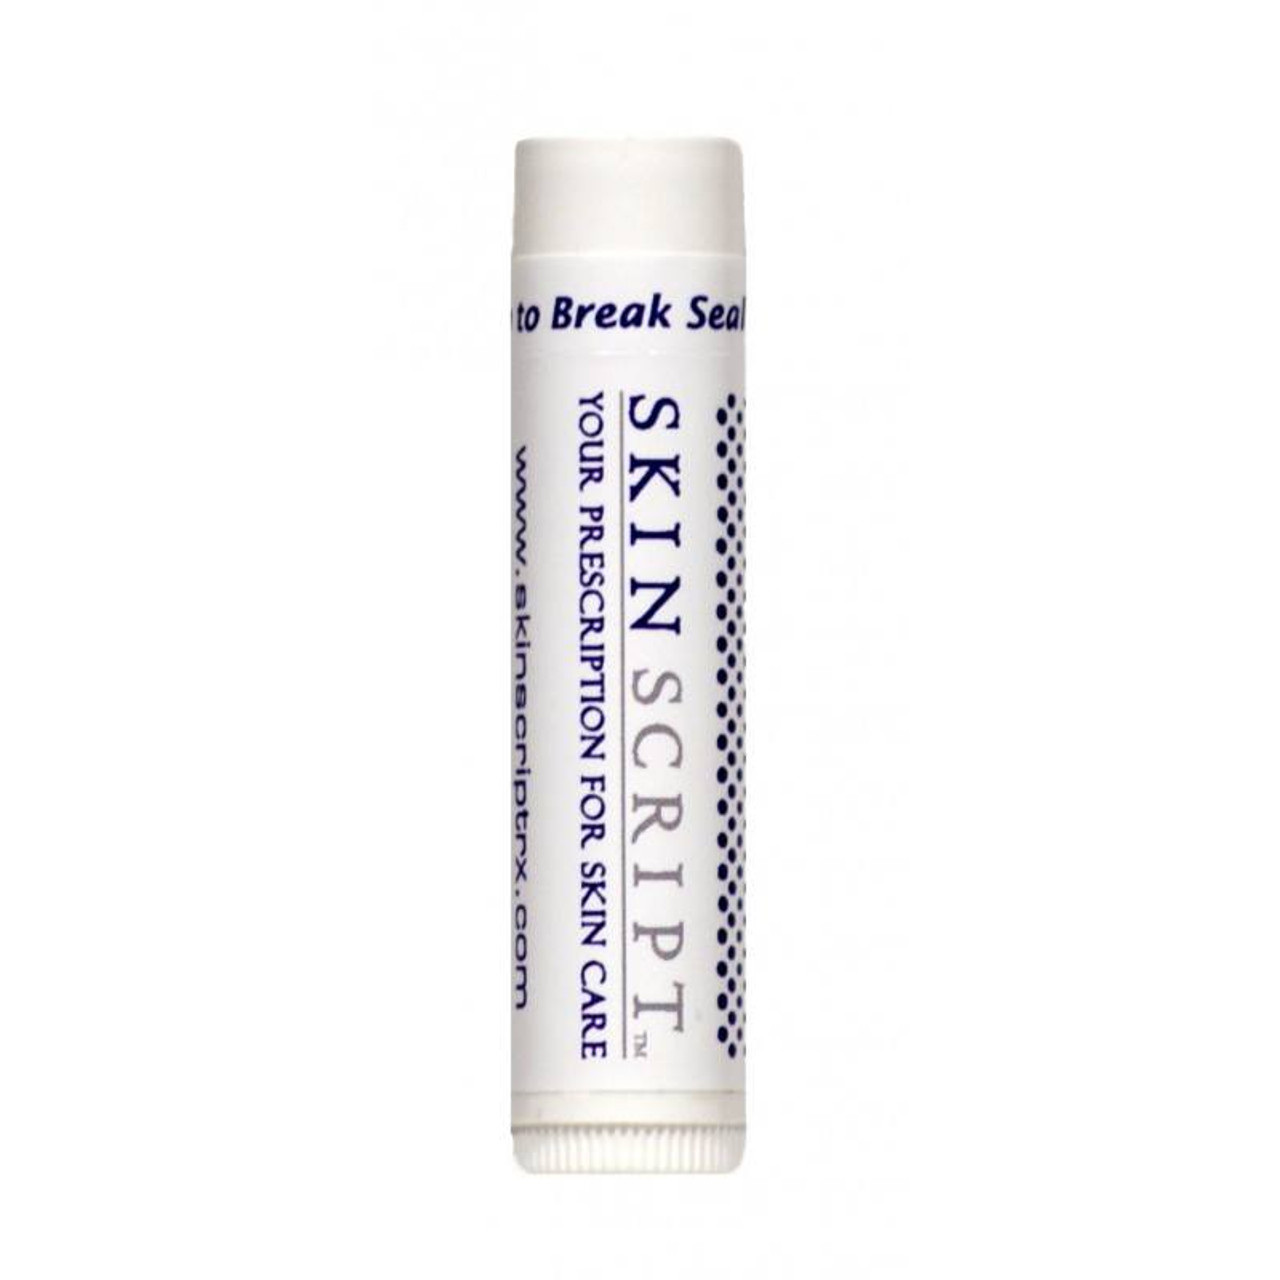 Skin Script Lip Balm SPF 15 ® on Sale at $5 - Free Samples & Reward Points